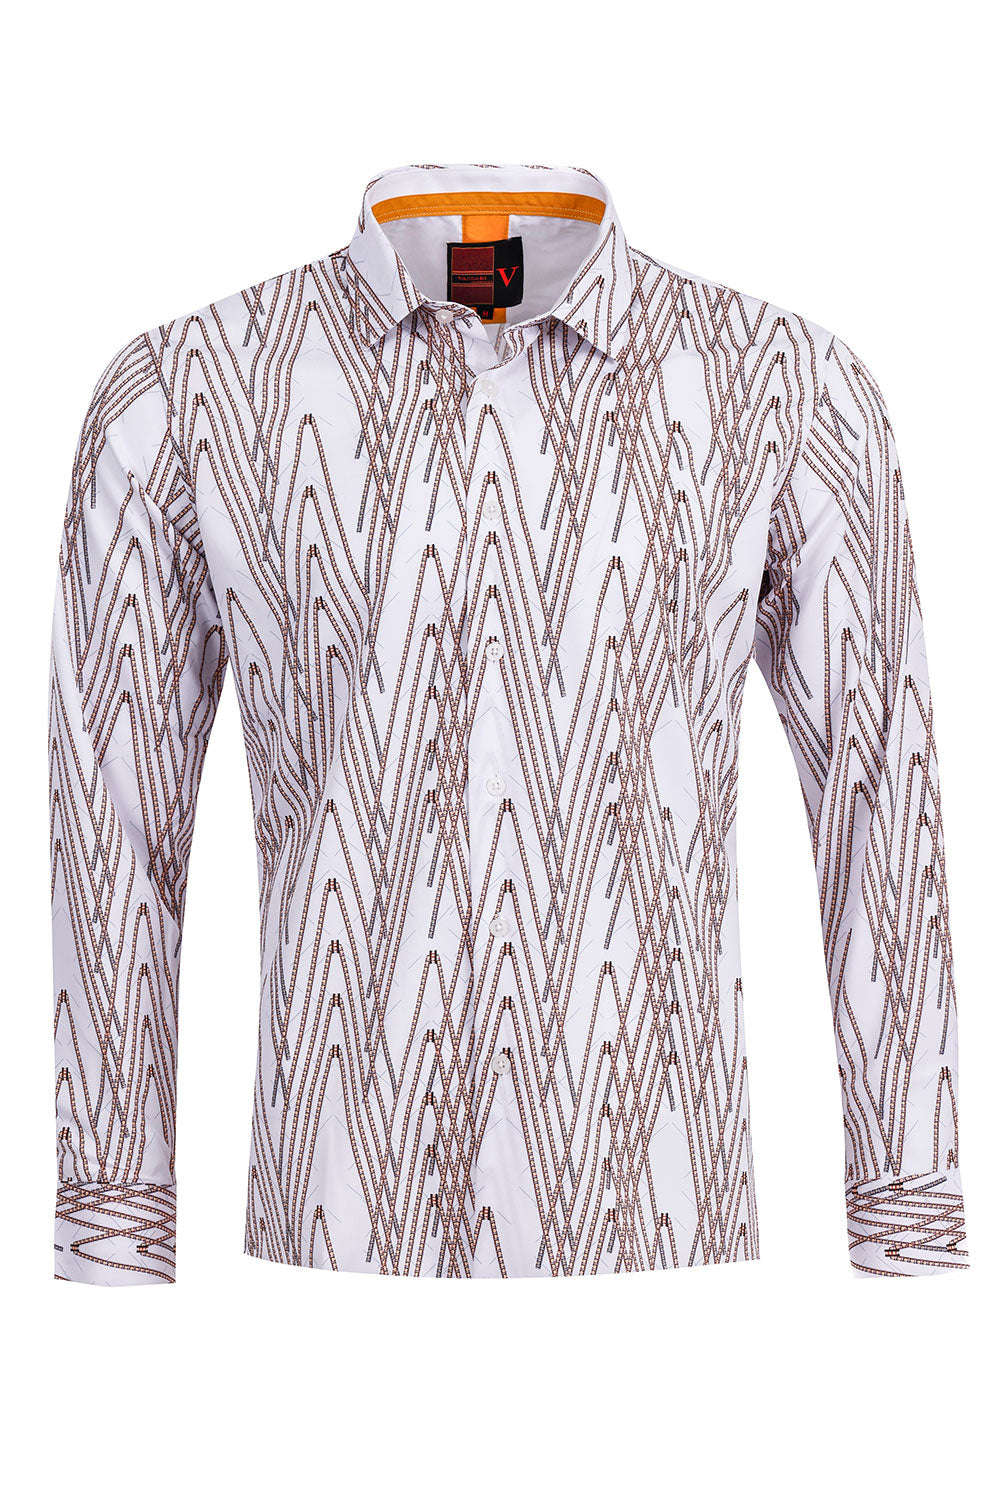 Vassari Men's Geometric Patter Design Long Sleeve Shirt 3VS10